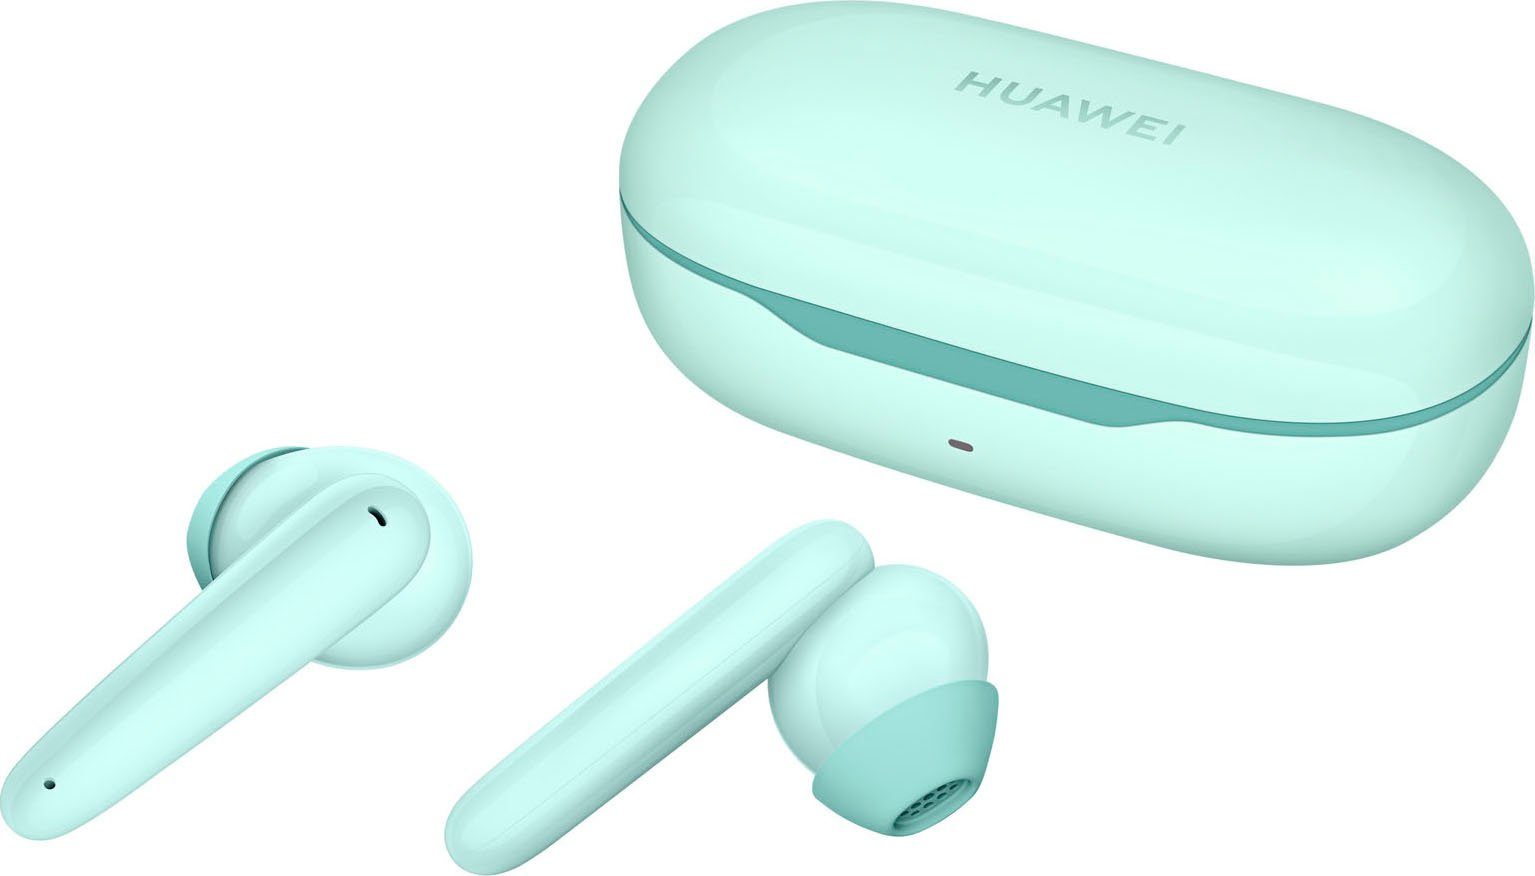 SE Akkulaufzeit) In-Ear-Kopfhörer wireless Huawei Kristallklarer Lange Sound, Blau FreeBuds (Premium-Design,